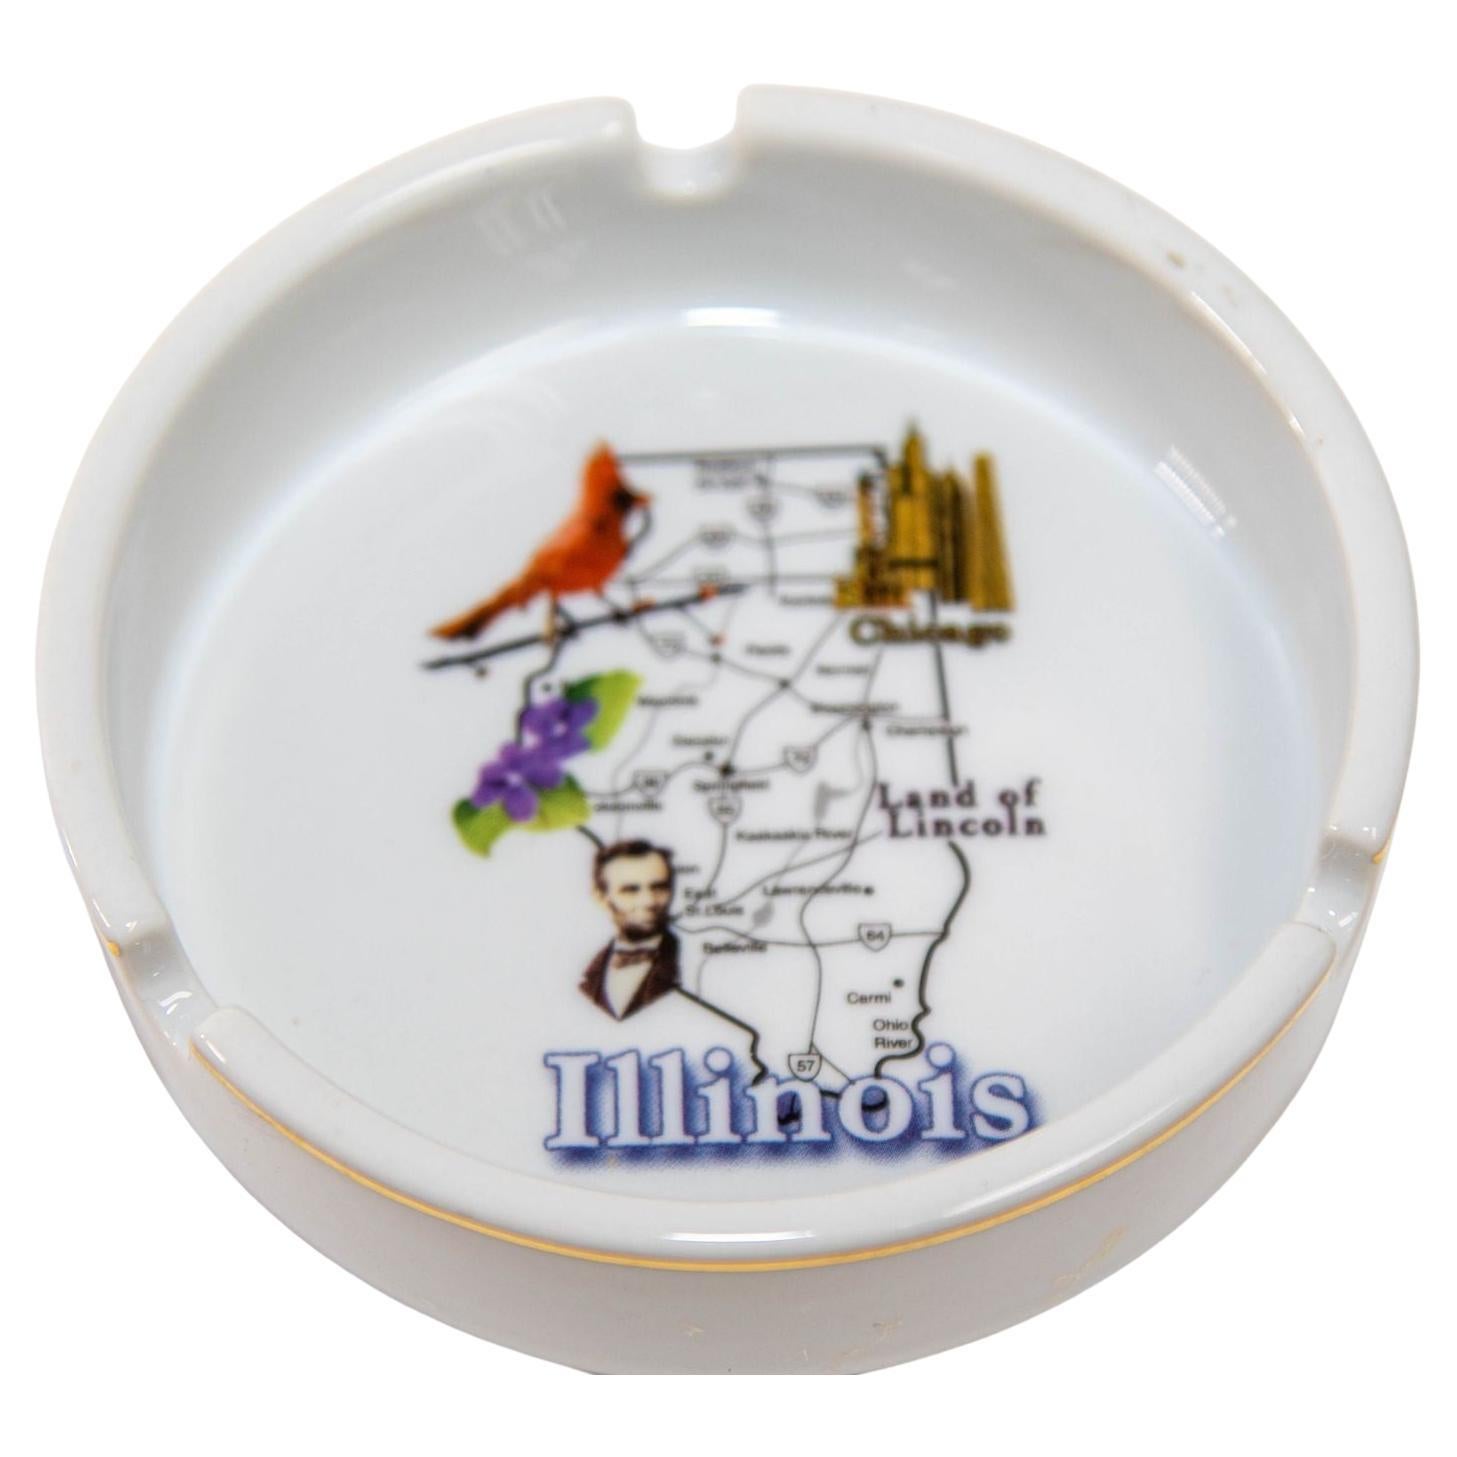 1980 Post Modern Ashtray Illinois Land of President Lincoln Round Ceramic Dish